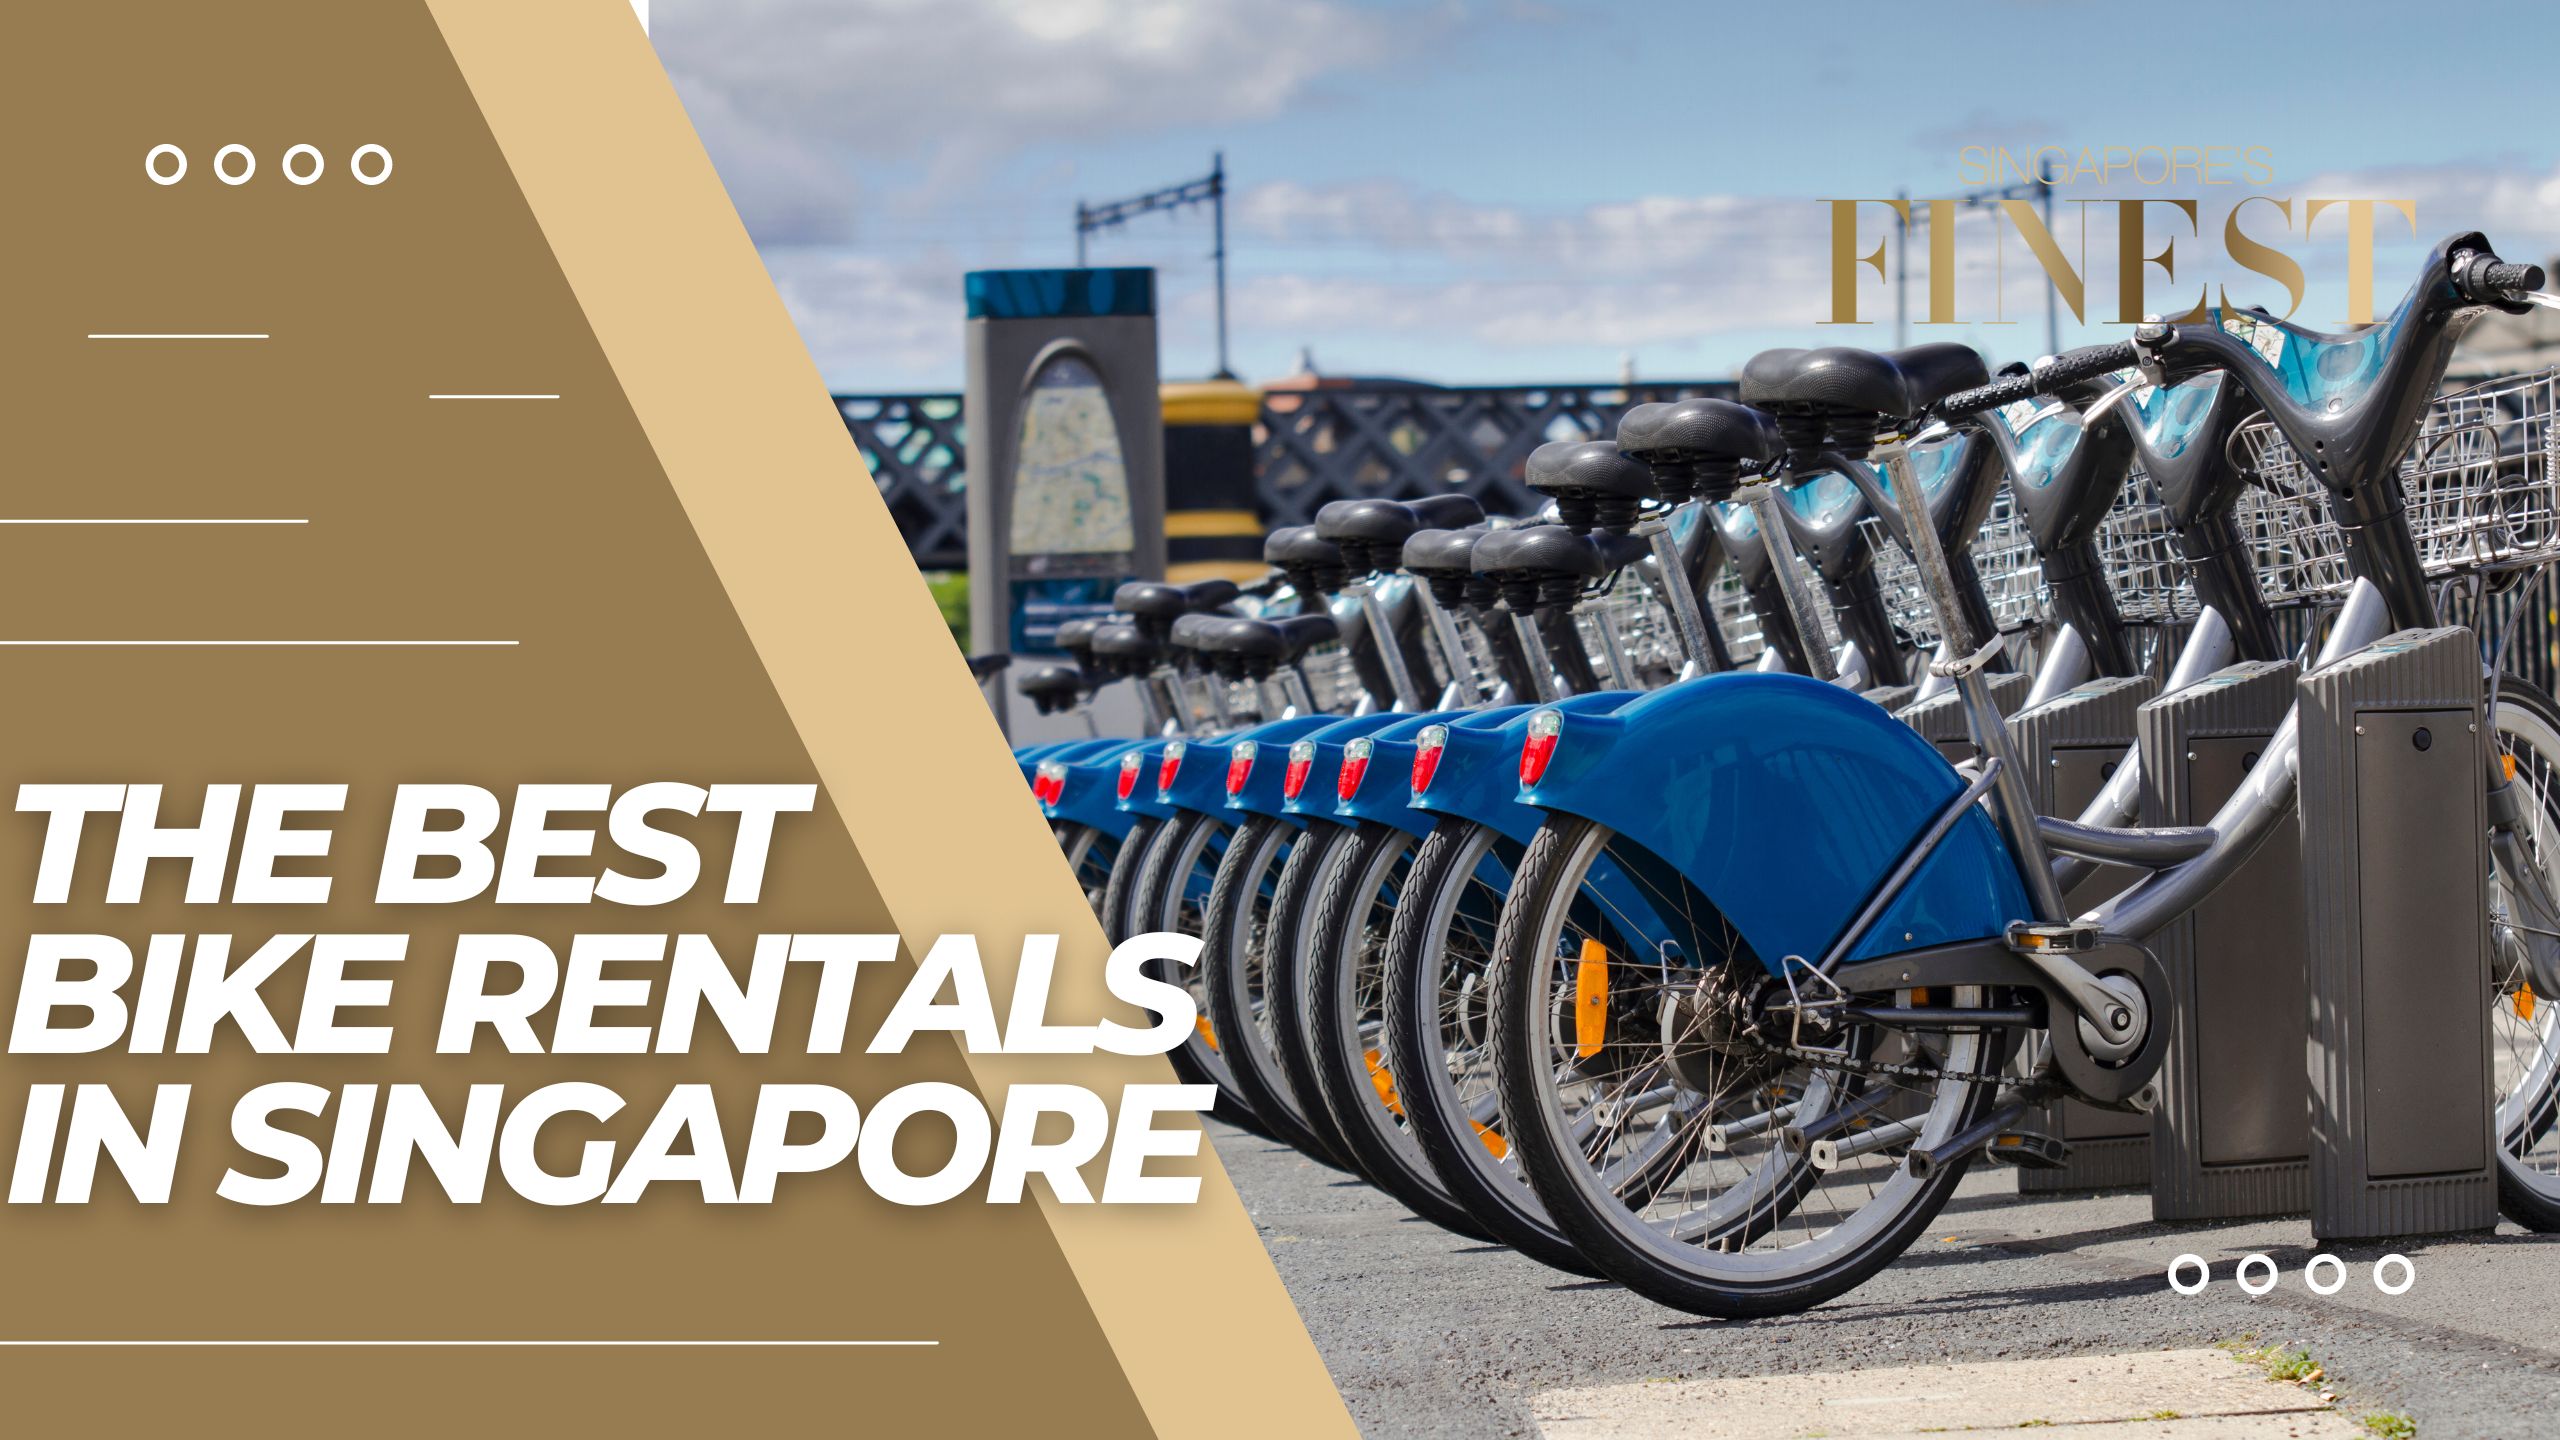 The Finest Bike Rentals in Singapore